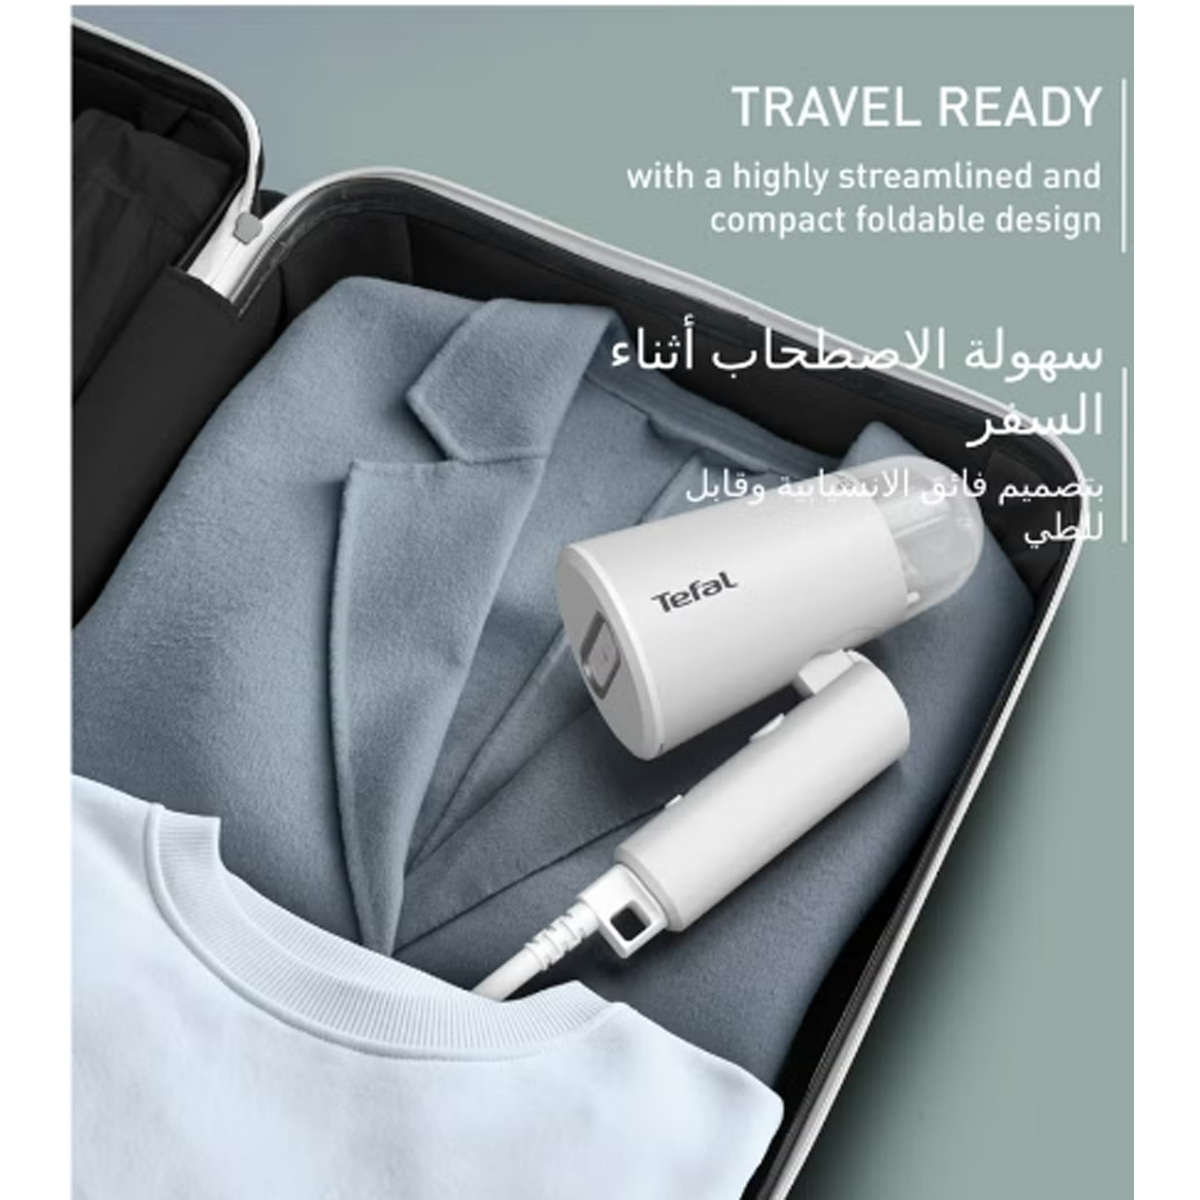 Tefal Handheld Garment Steamers, 1200 W, White, DT1020G0